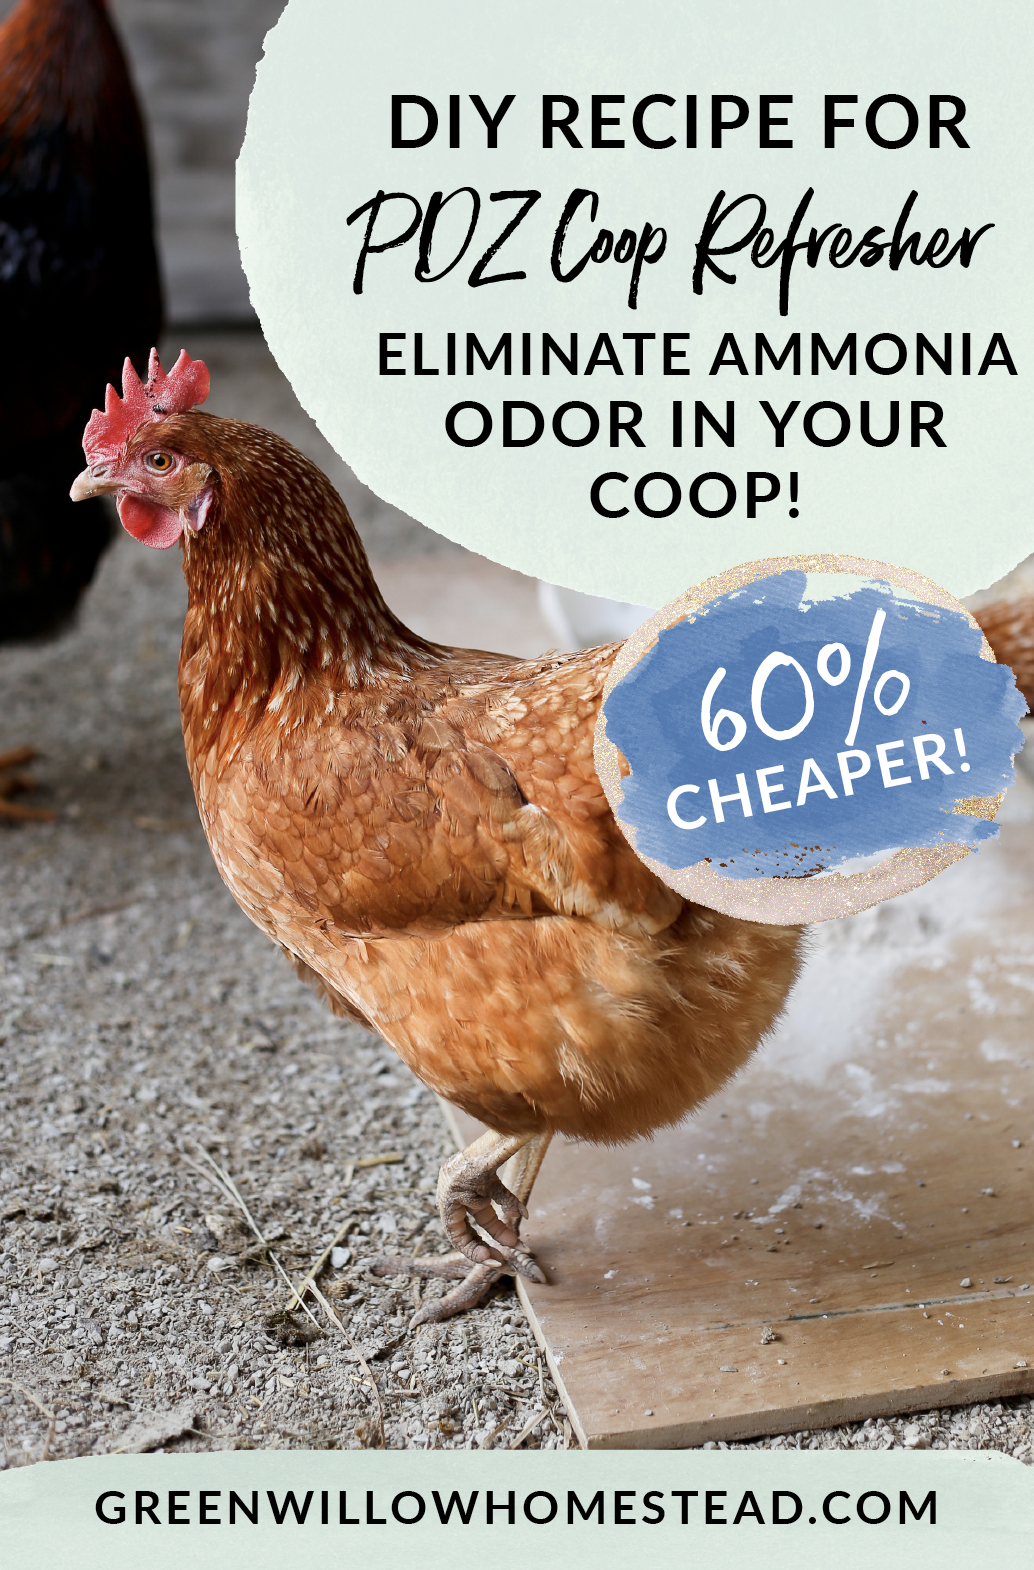 Chicken Coop Deodorizer Recipe to get rid of ammonia odor